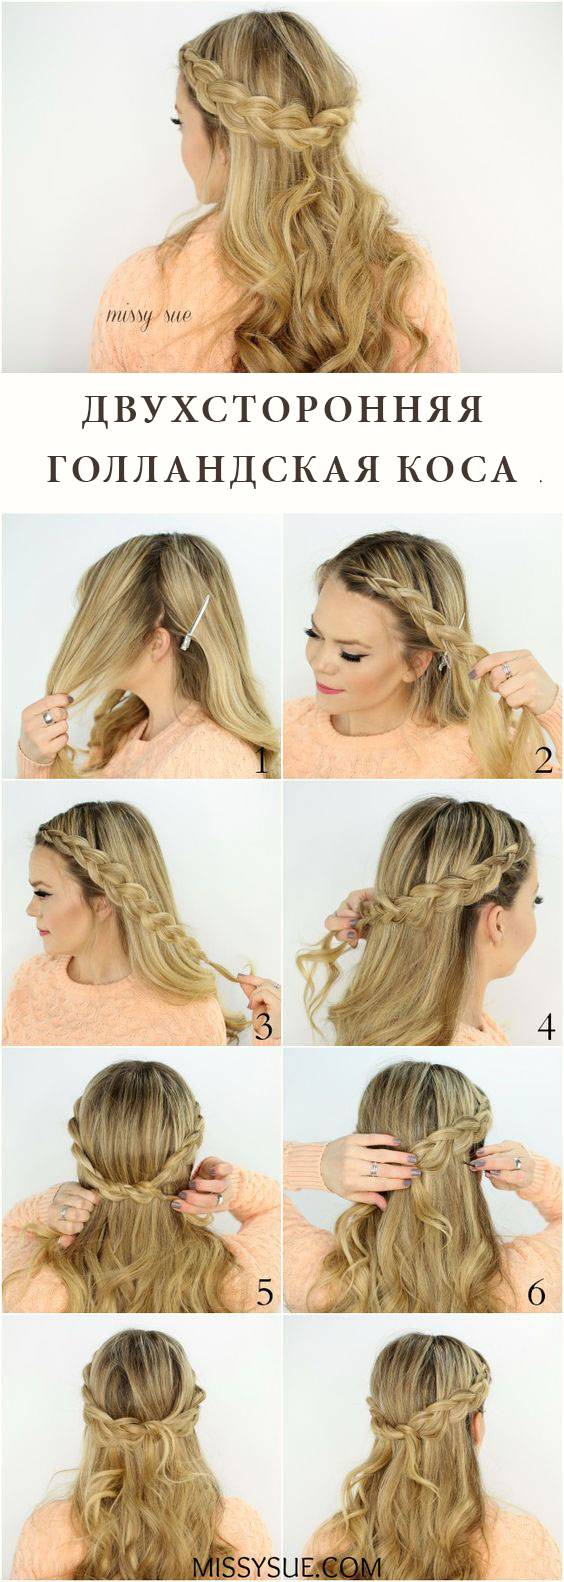 JamAdvice_com_ua_hairstyles-with-braids-for-long-hair-9